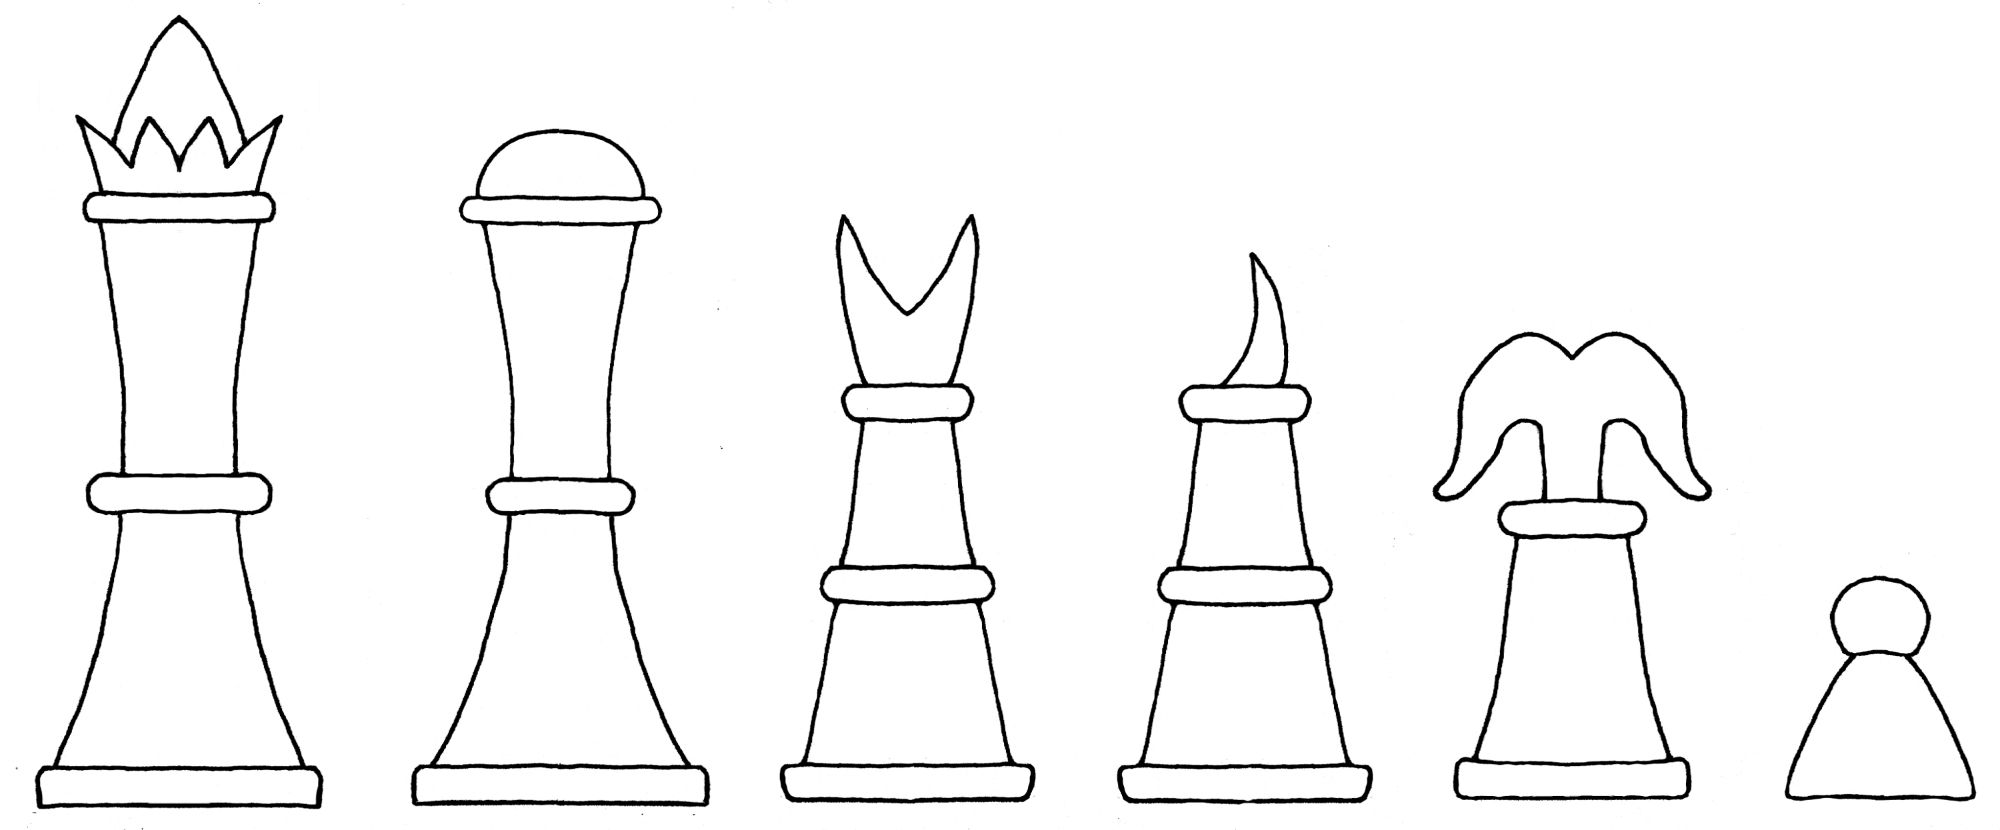  Interpretive diagram of the Publicius chess set